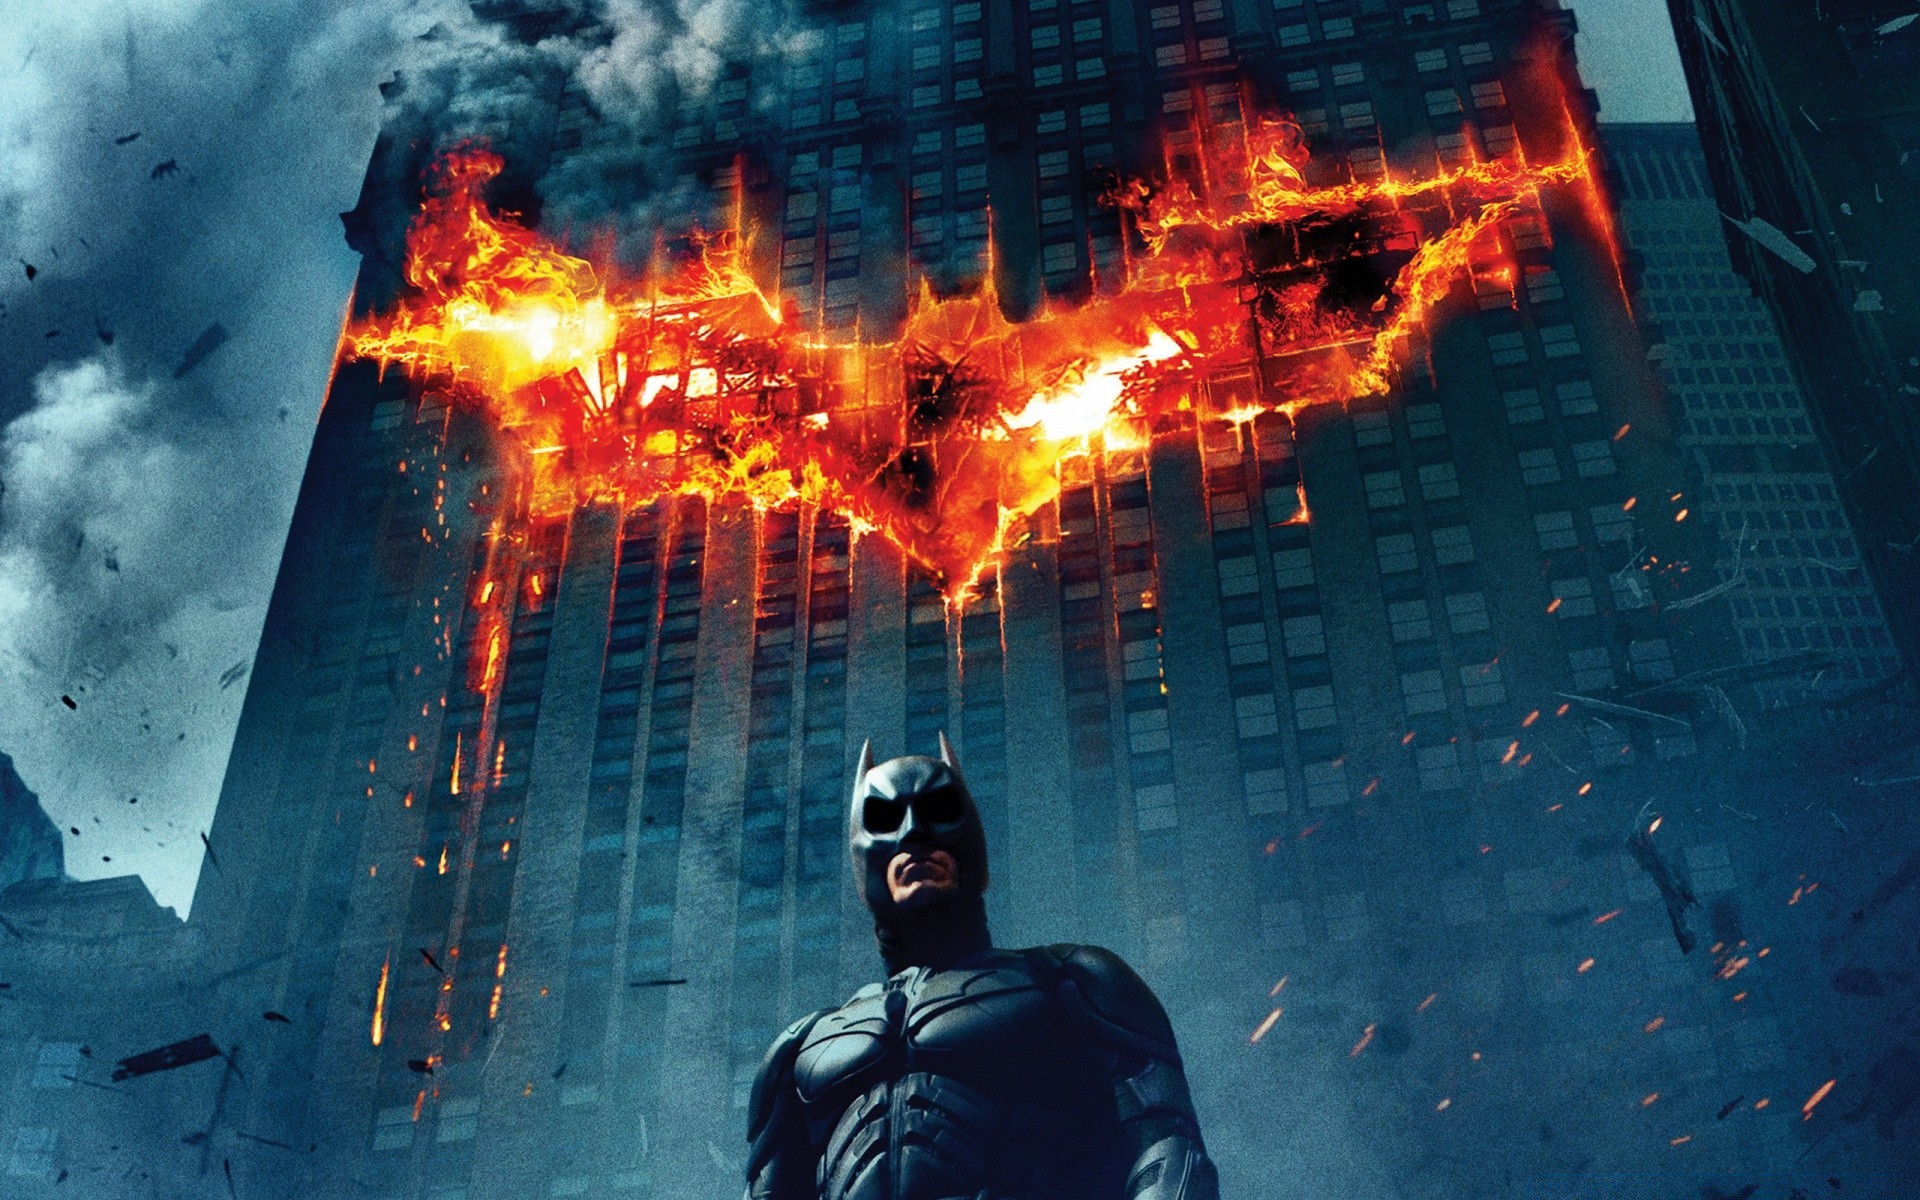 бэтмен пламя свет бизнес город технология